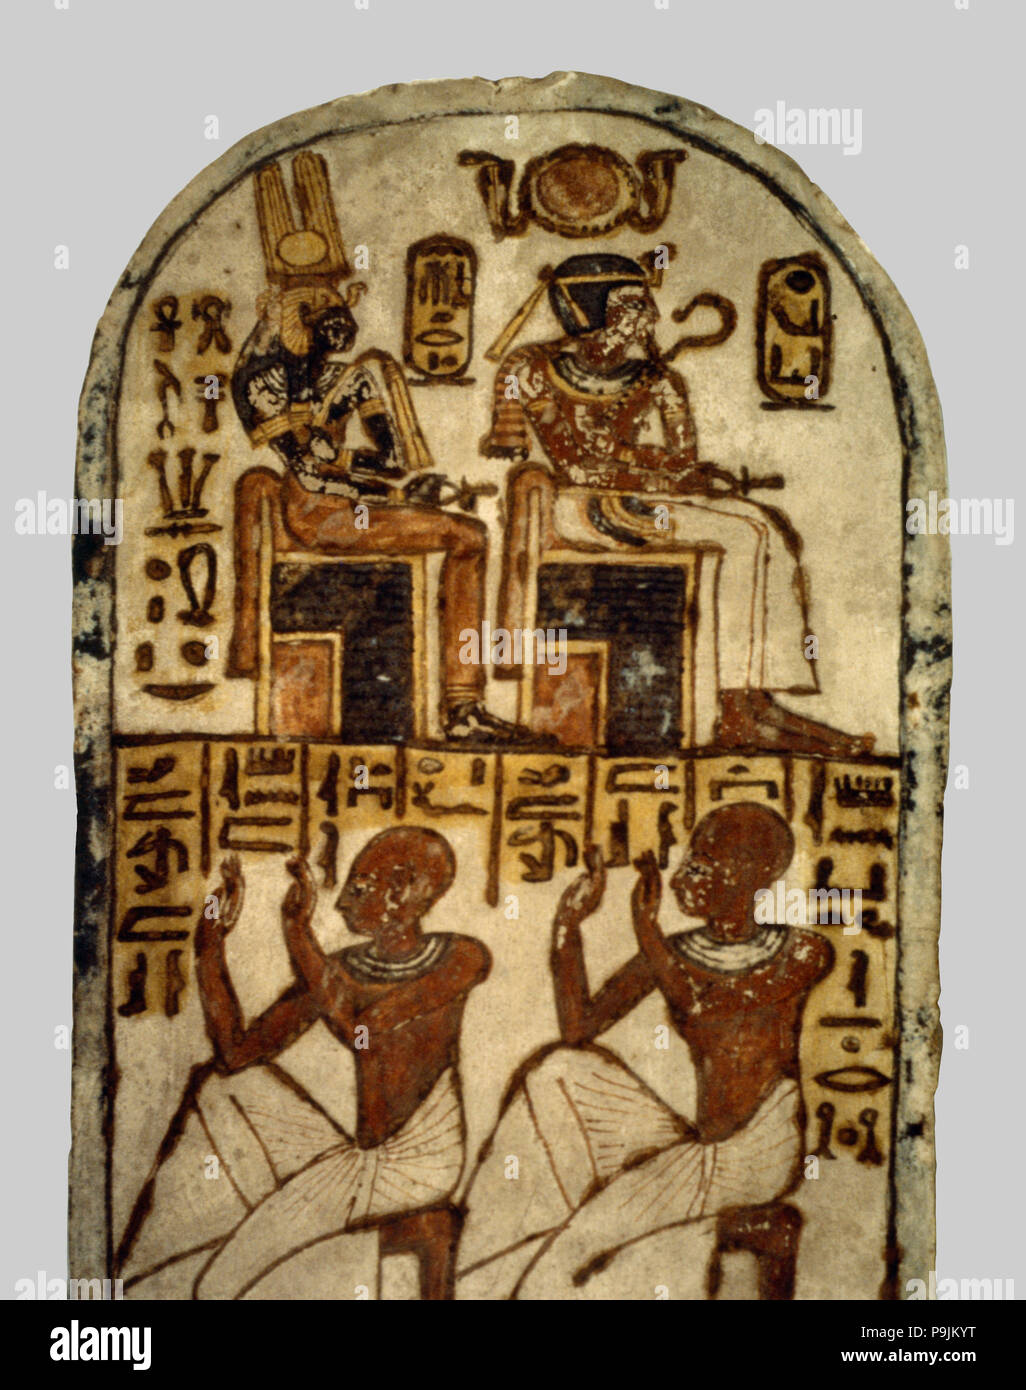 Ahmose Nefertari stele, queen mother of Amenhotep I. Stock Photo